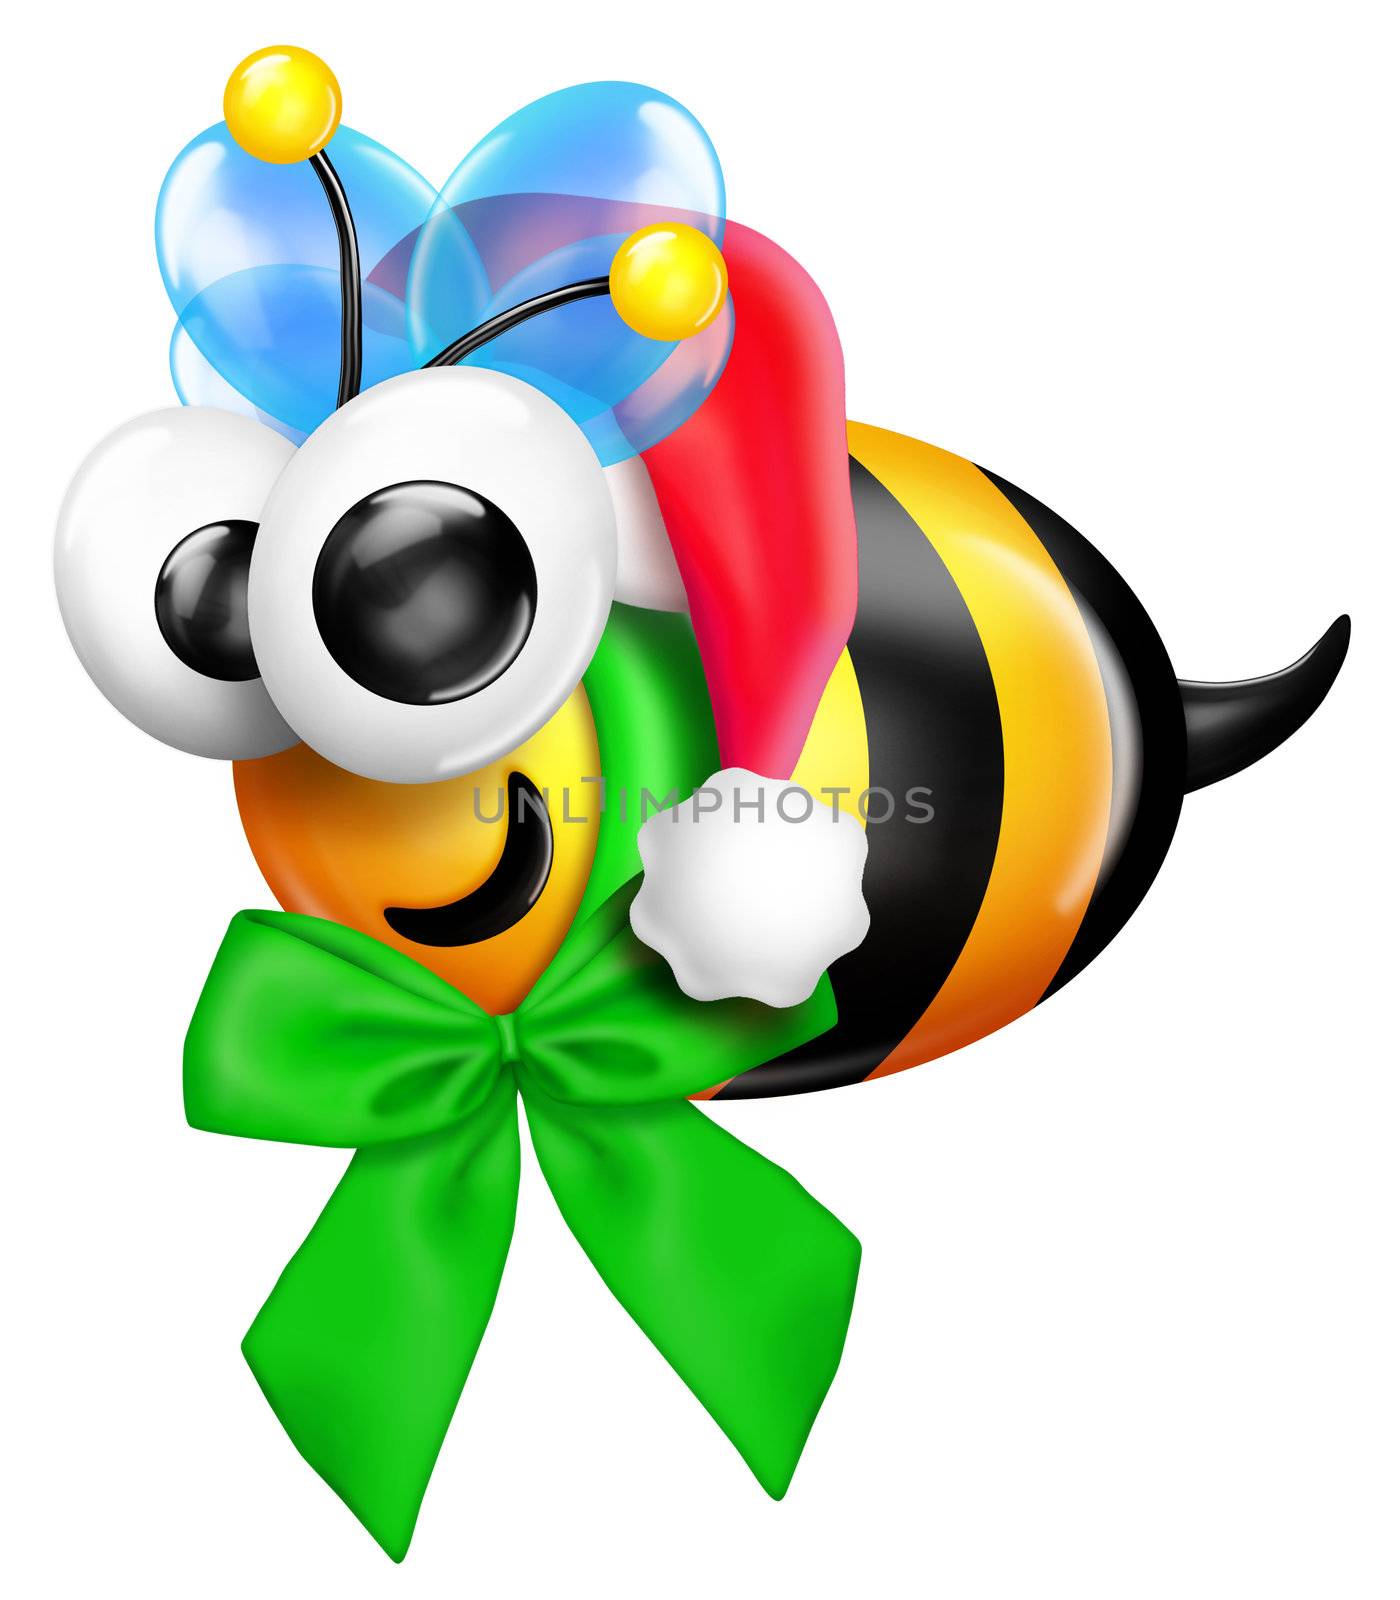 Whimsical Cartoon Bee with Santa Hat by komodoempire